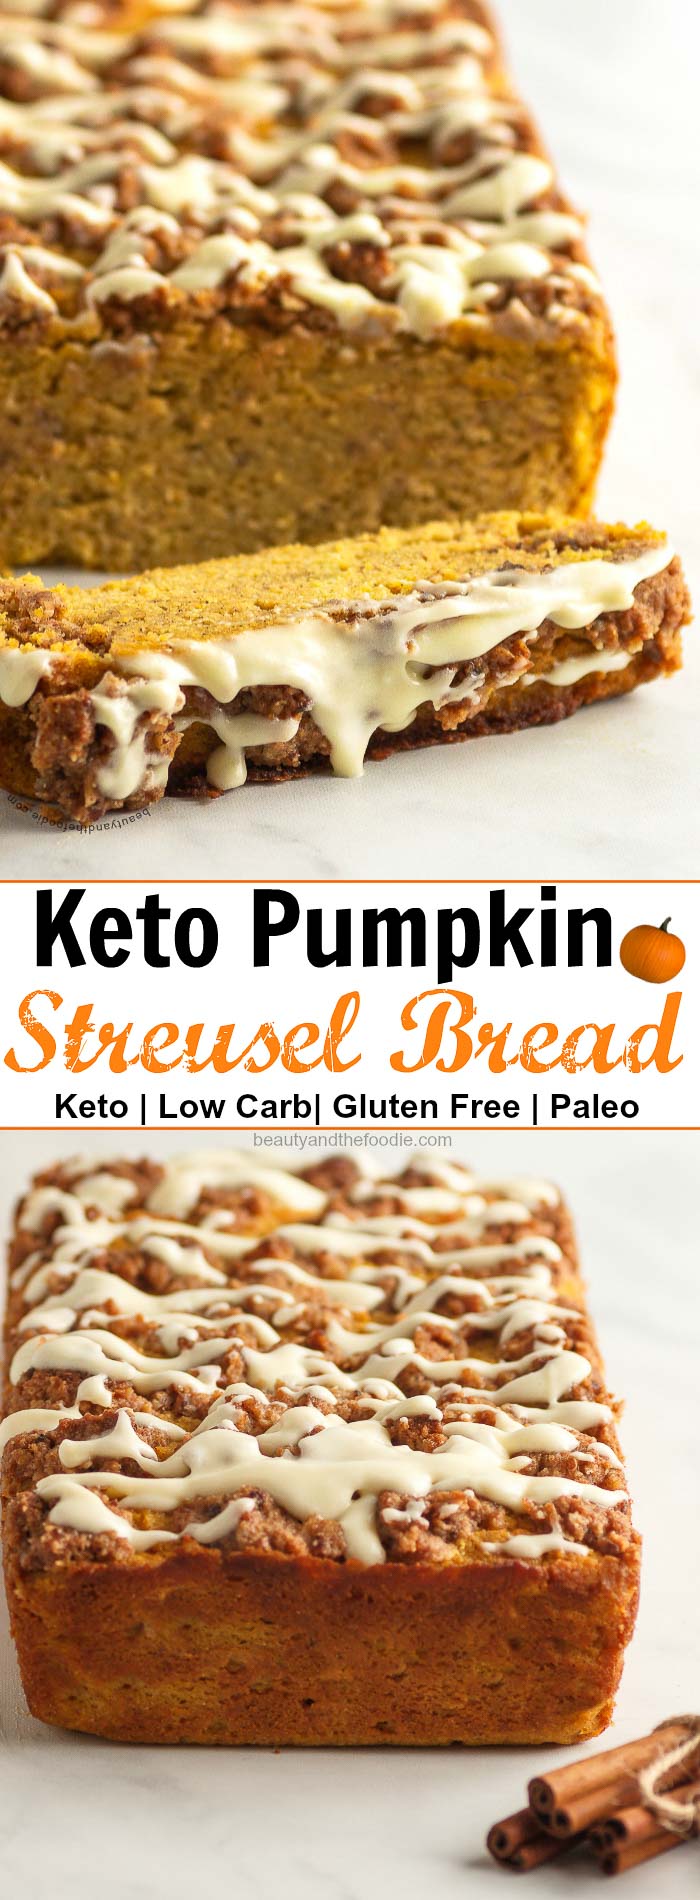 Keto Pumpkin Streusel Bread- Low carb, paleo option, & gluten free